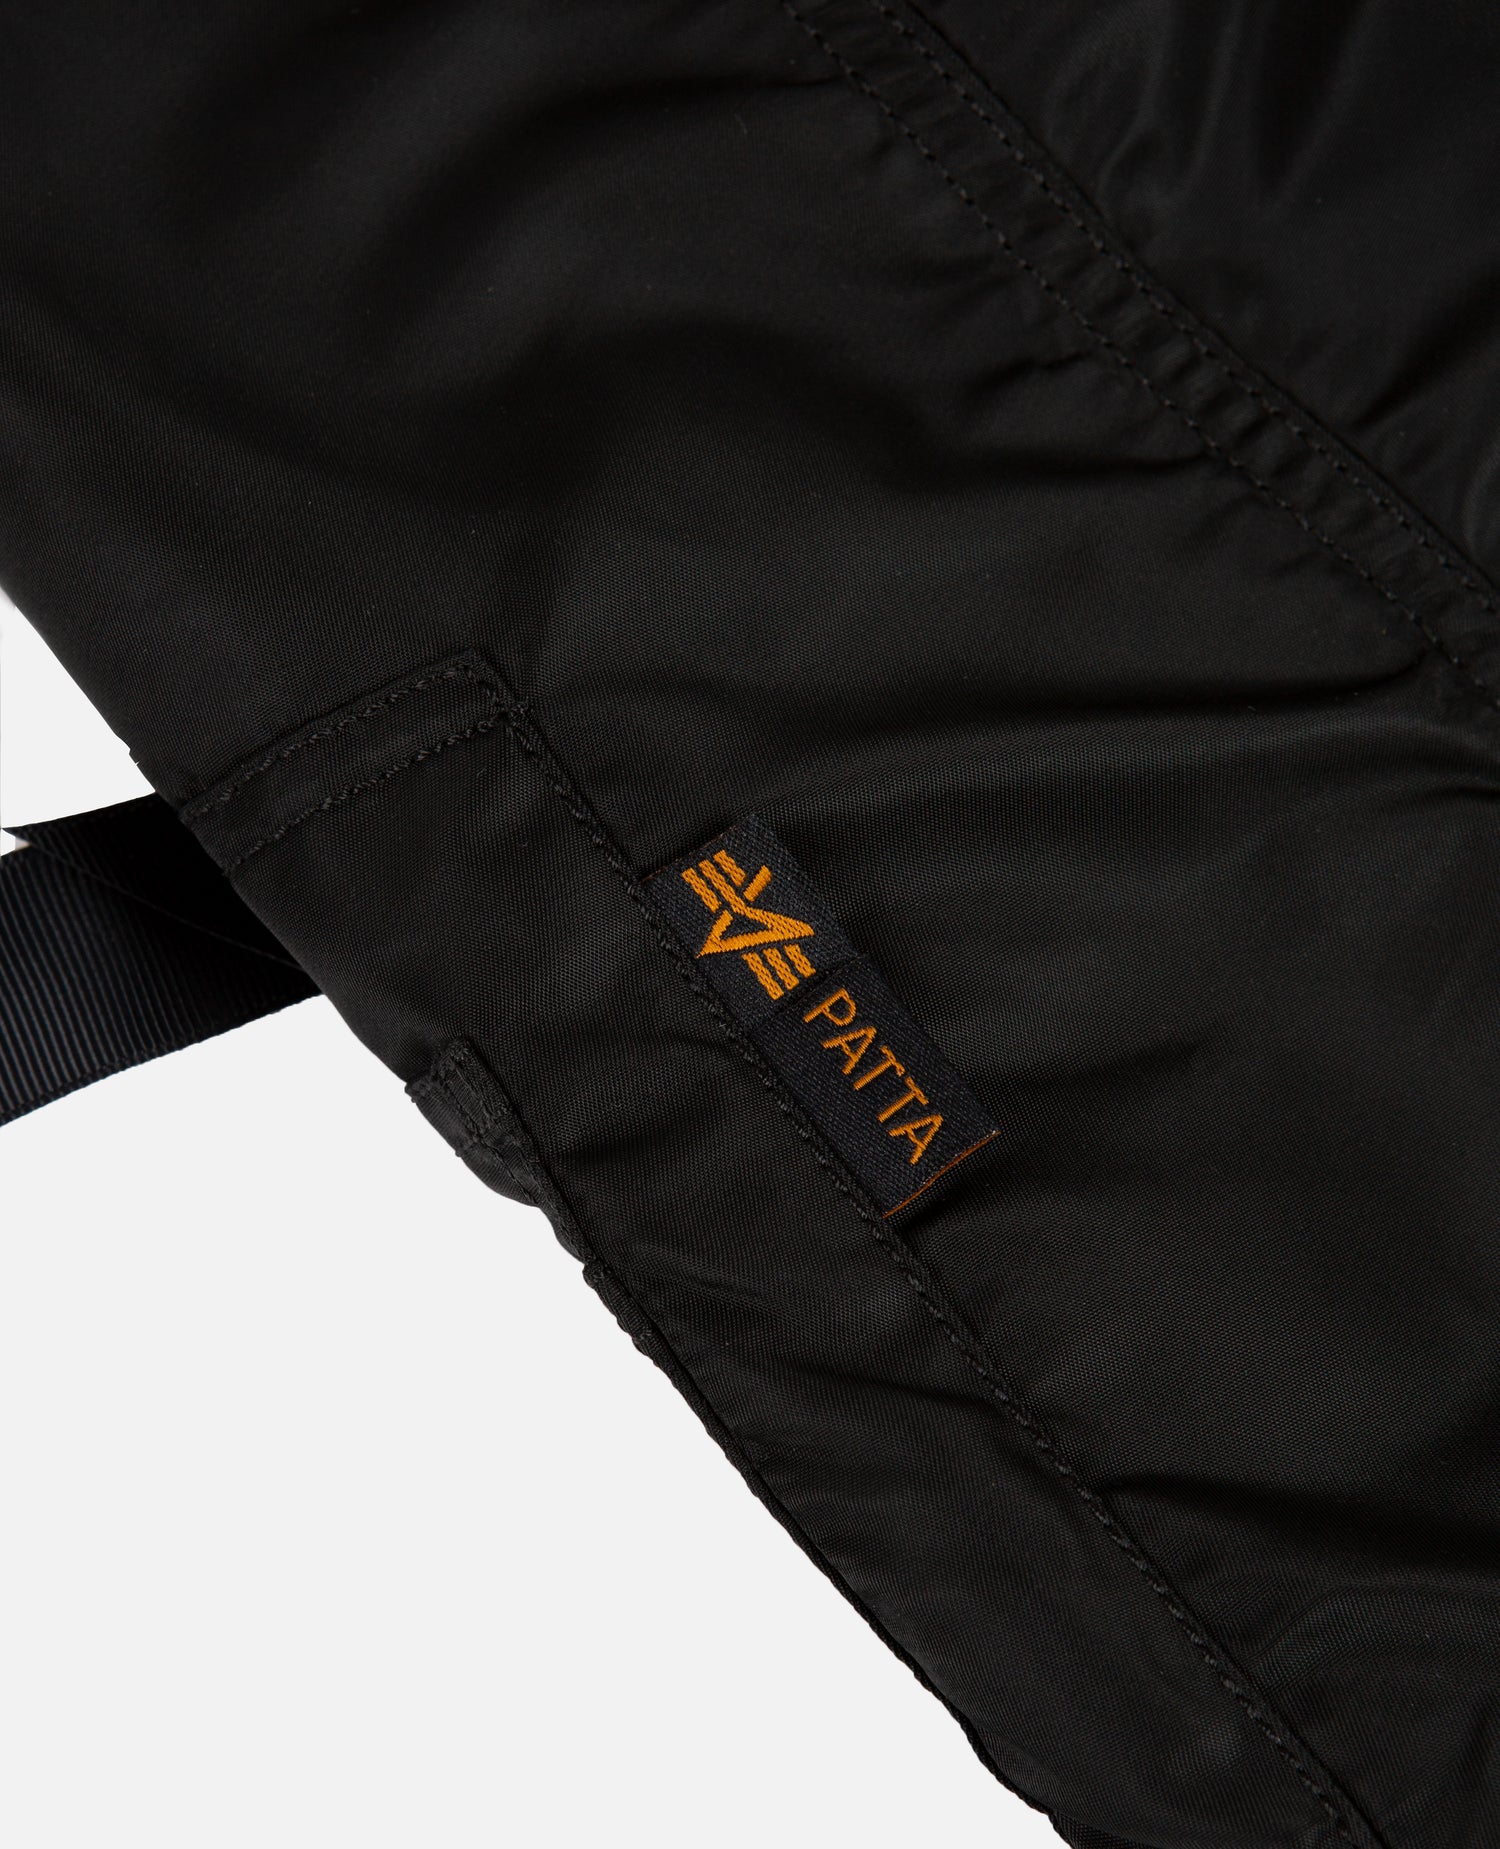 Store Exclusive: Patta x Alpha Industries MA-1 London Jacket (black/blue)